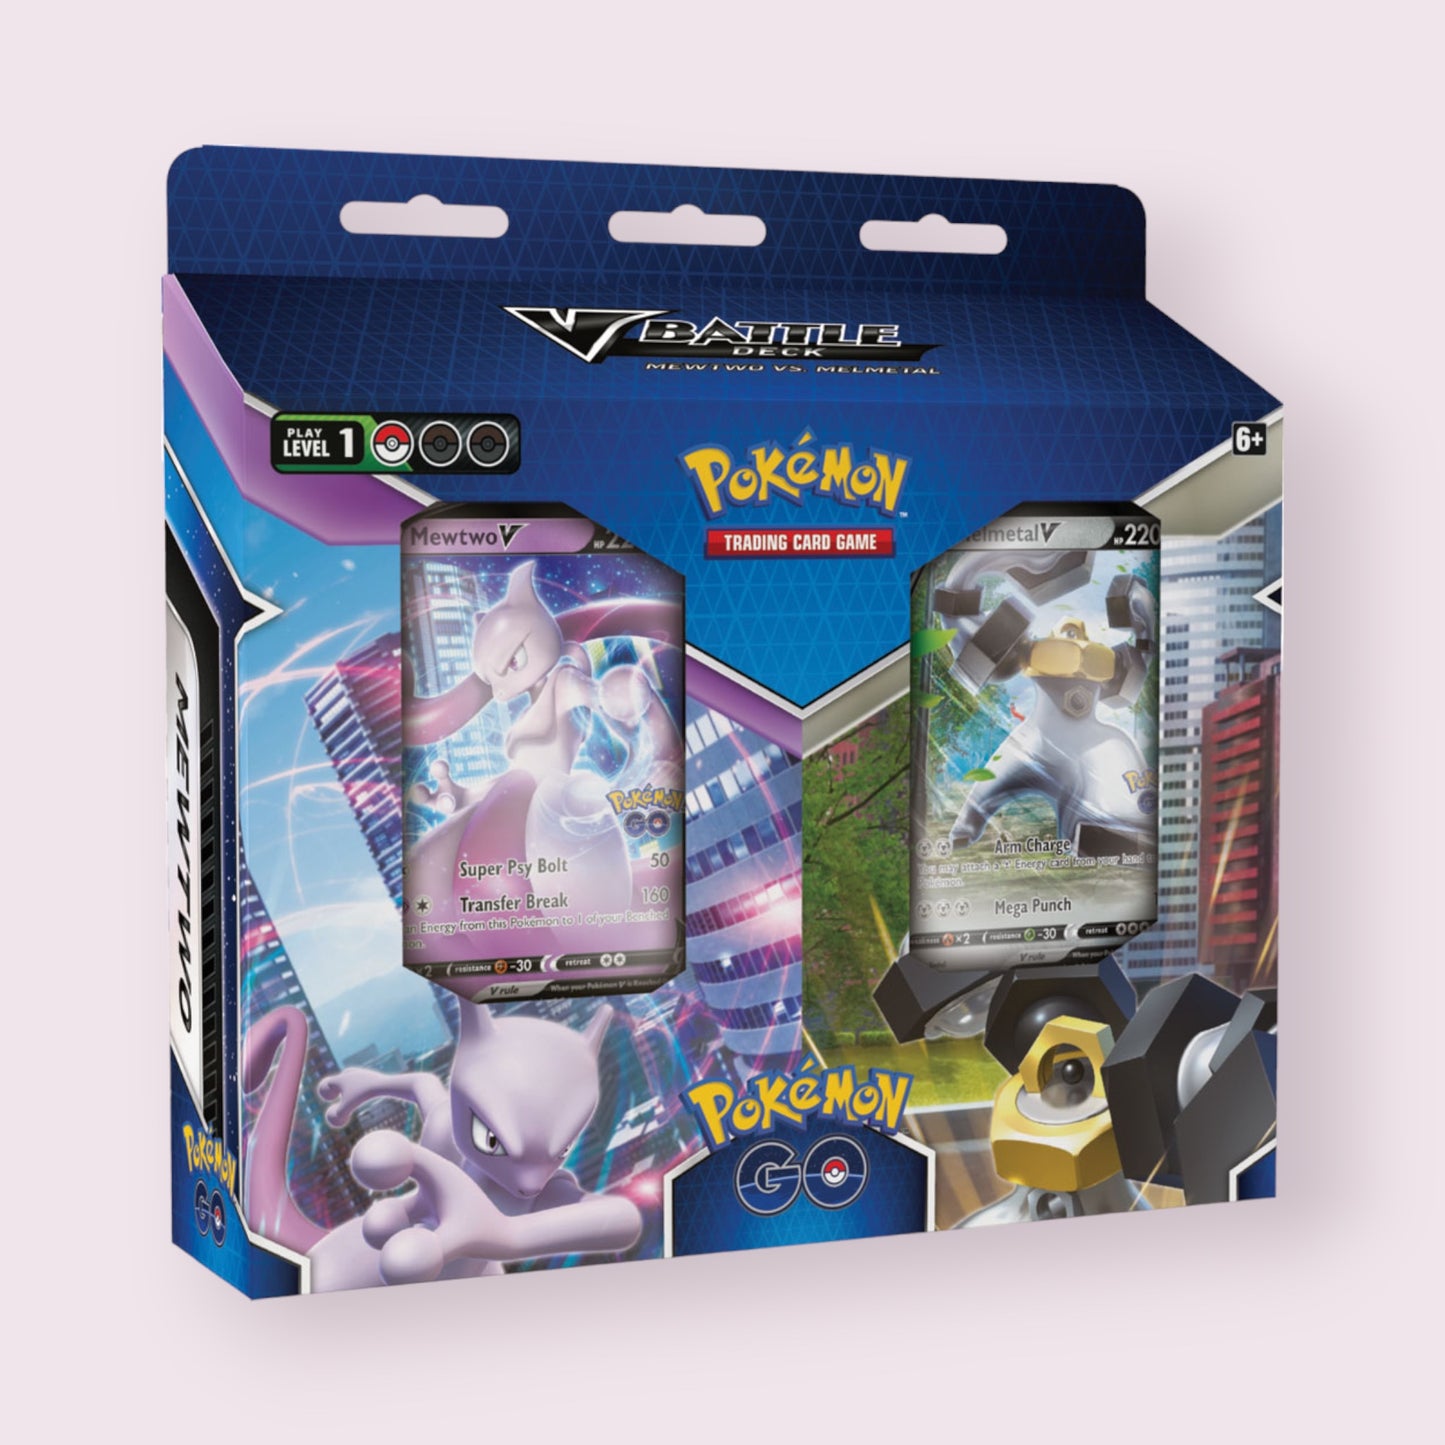 Pokémon Go V-battle Double Card Packs  Pixie Candy Shoppe   